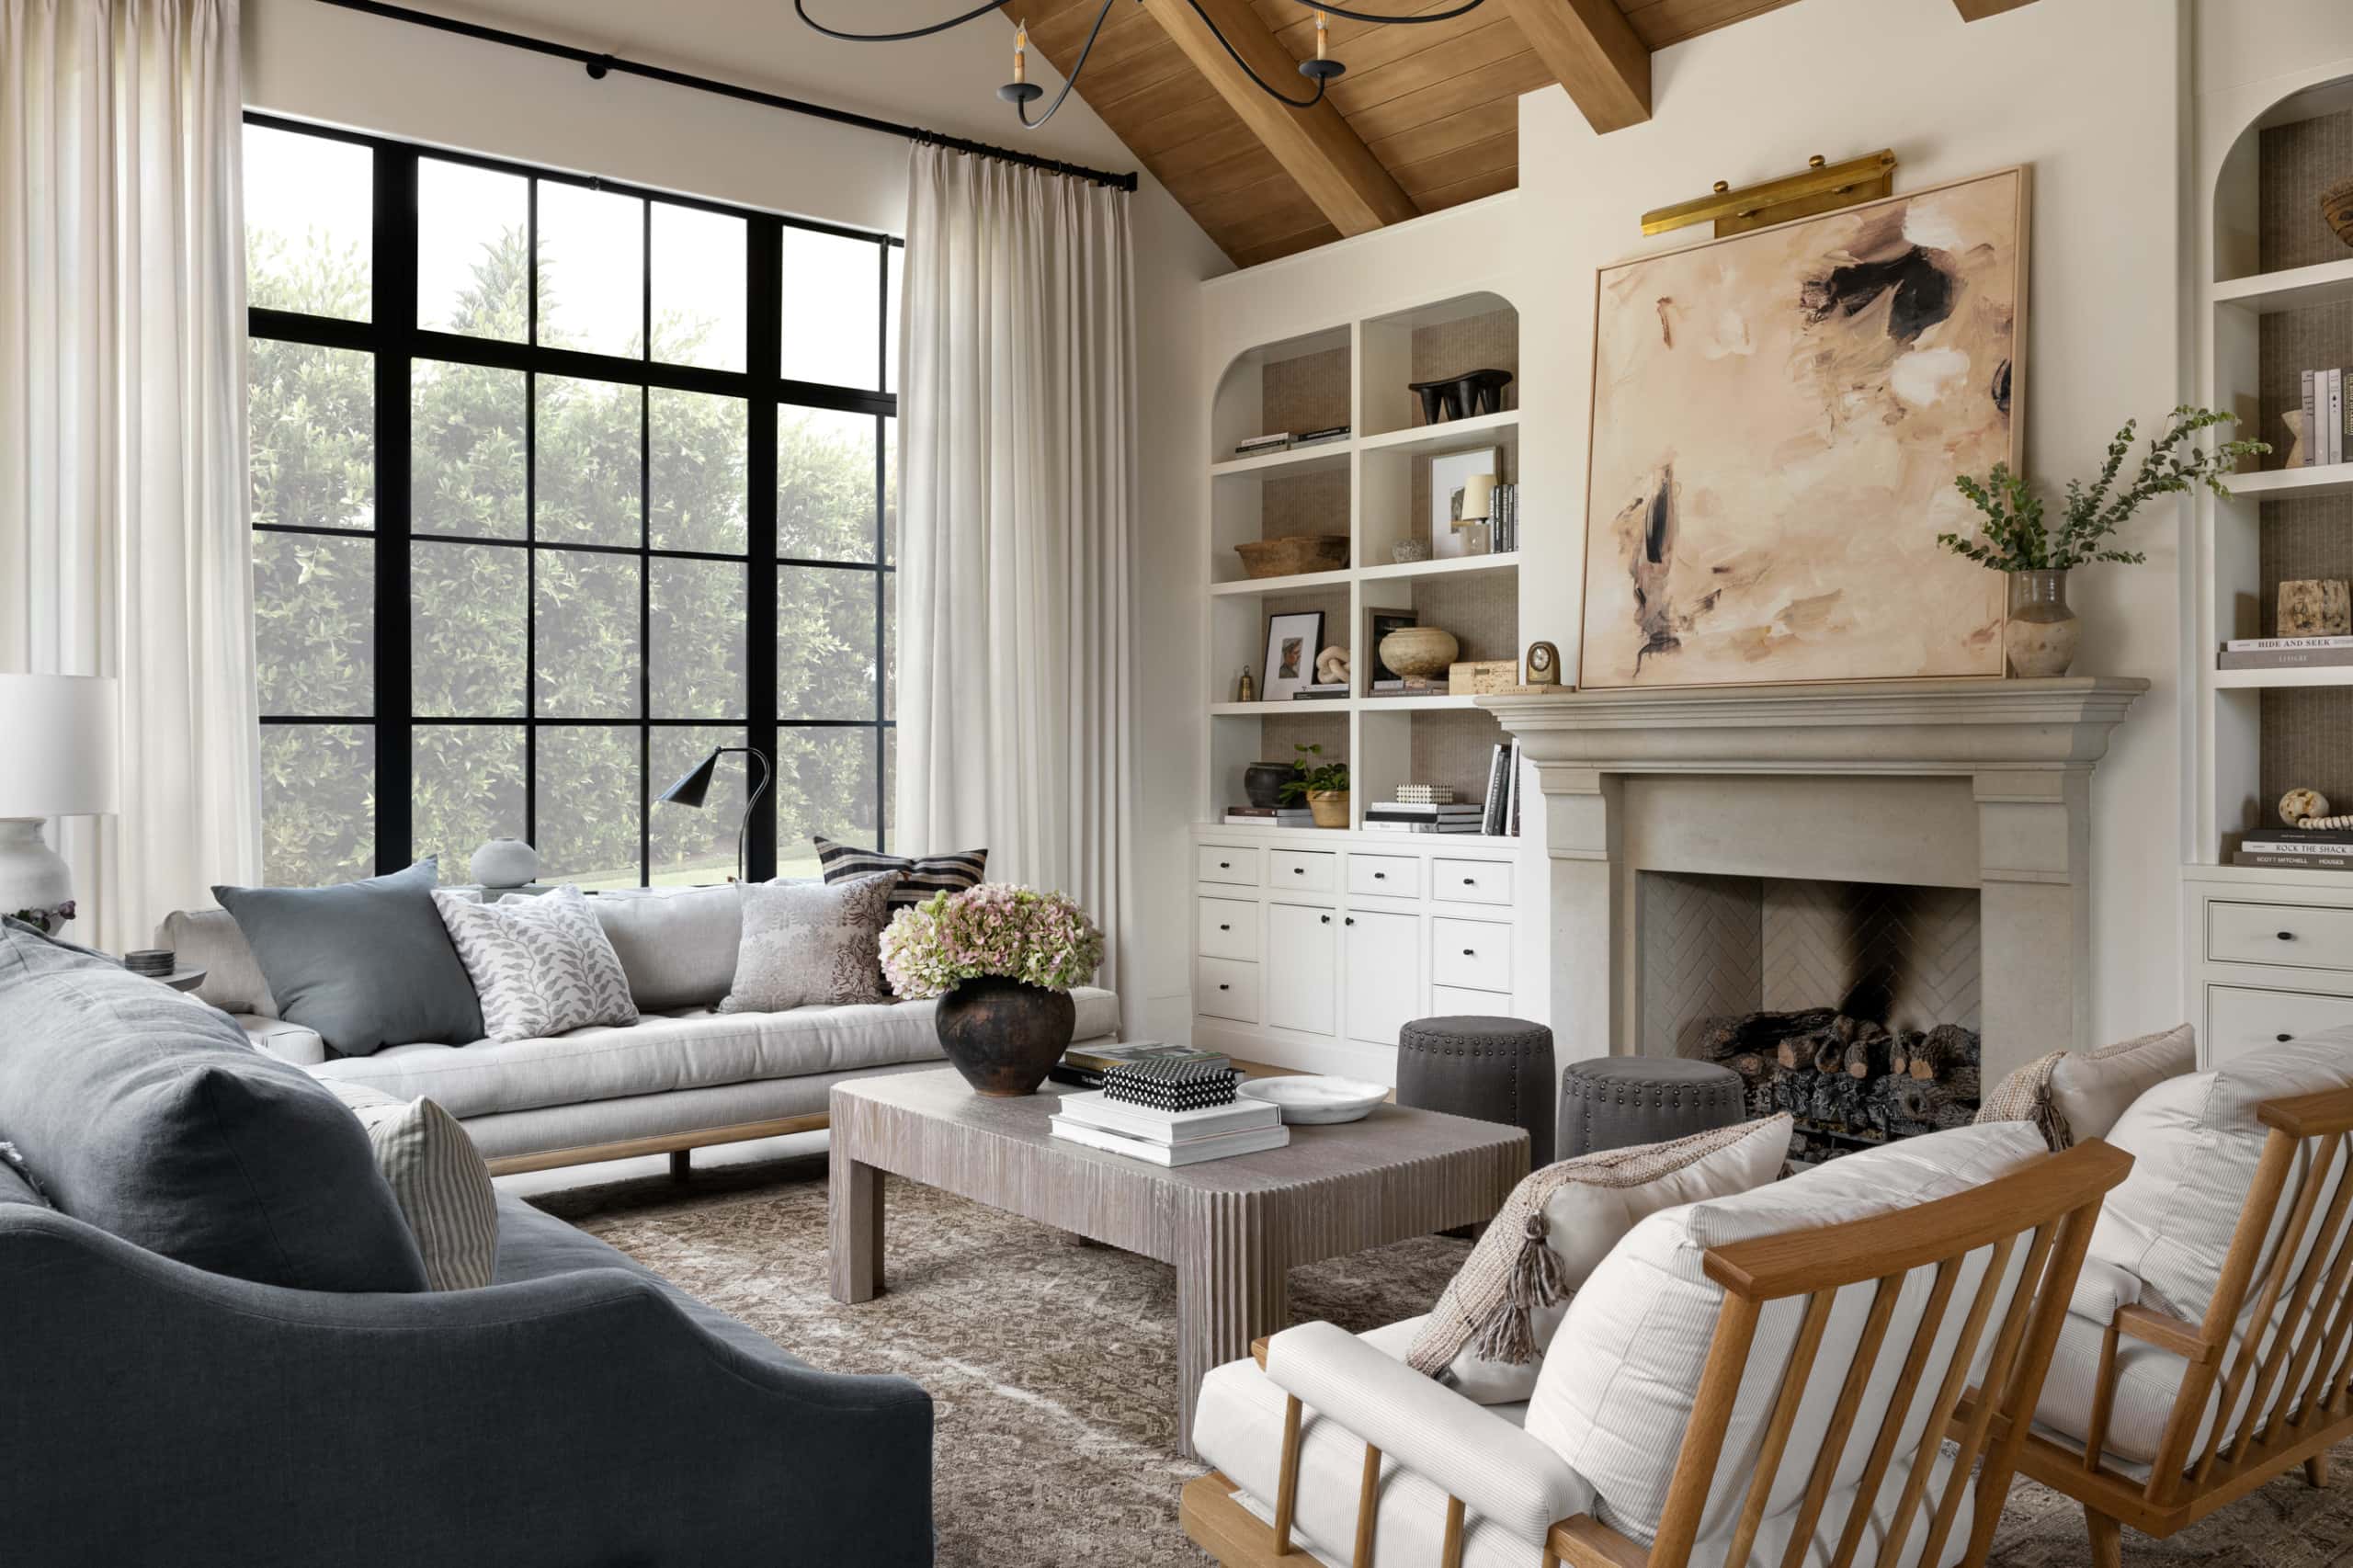 Quiet luxury living room example in home decor